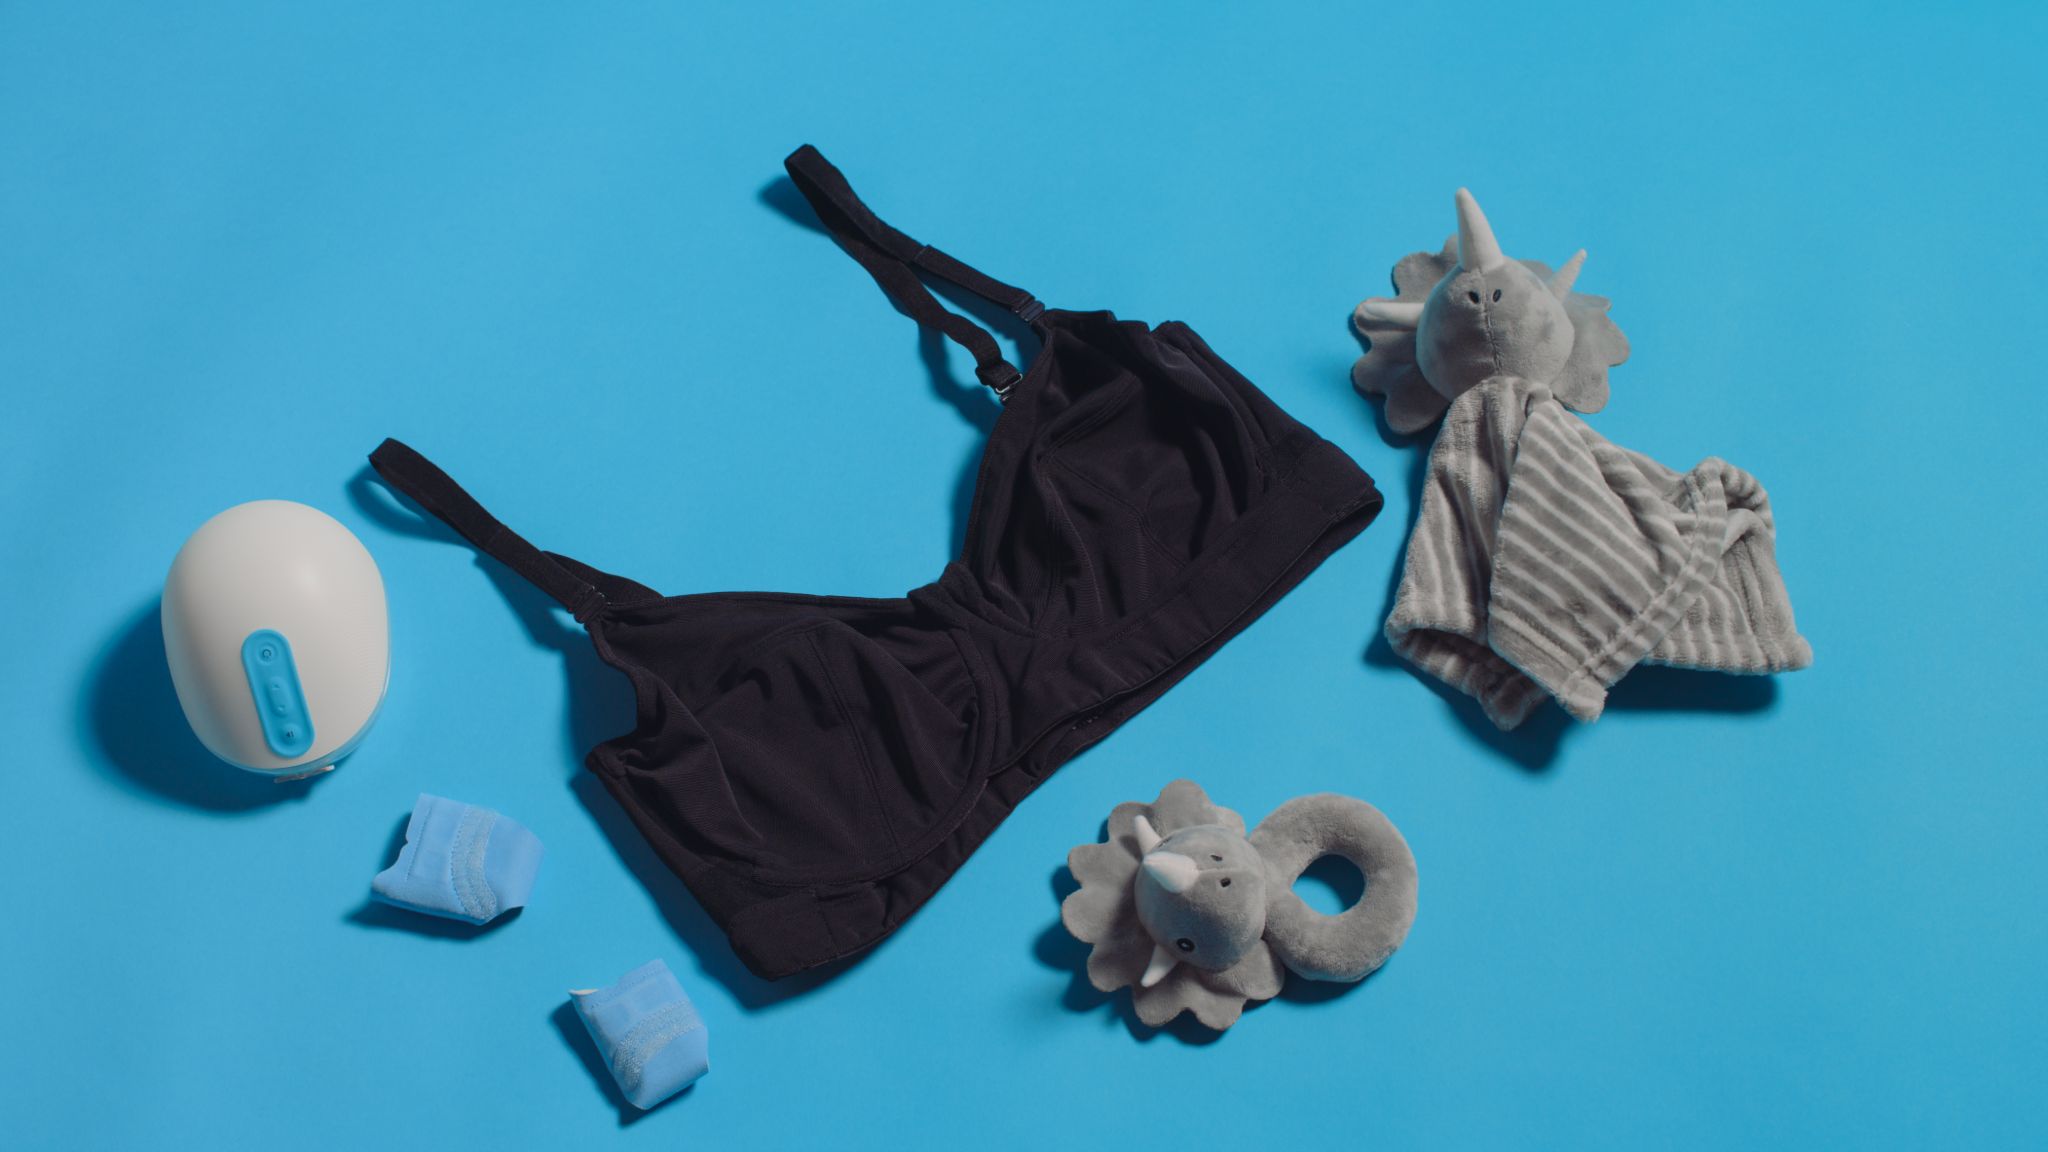 JENNAbra Product Flatlays Black bra on display with breastfeeding devices and two stuffed animal elephant toys